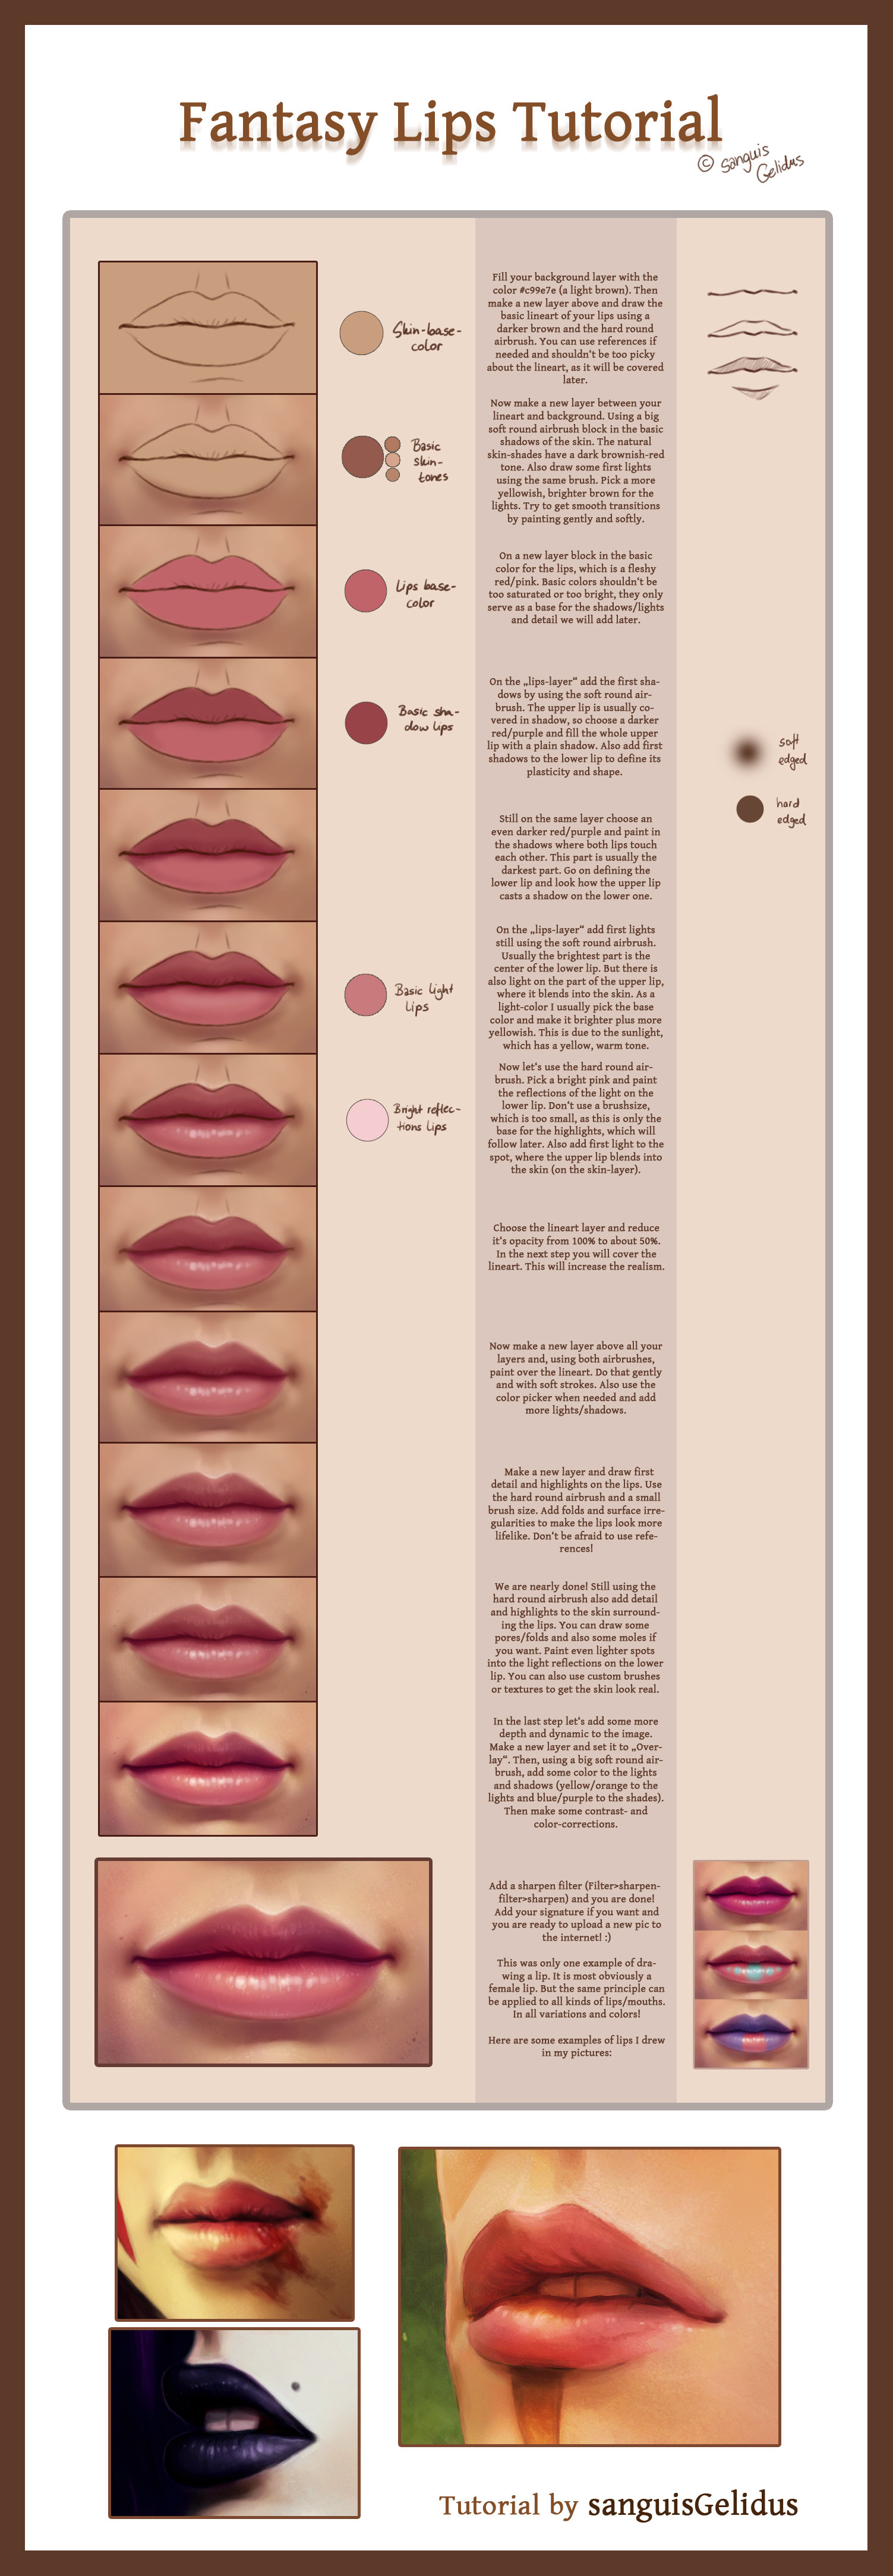 Az izim, renklendirme-http://fc05.deviantart.net/fs70/f/2012/211/a/b/fantasy_lips_tutorial_by_sanguisgelidus-d5965m3.jpg